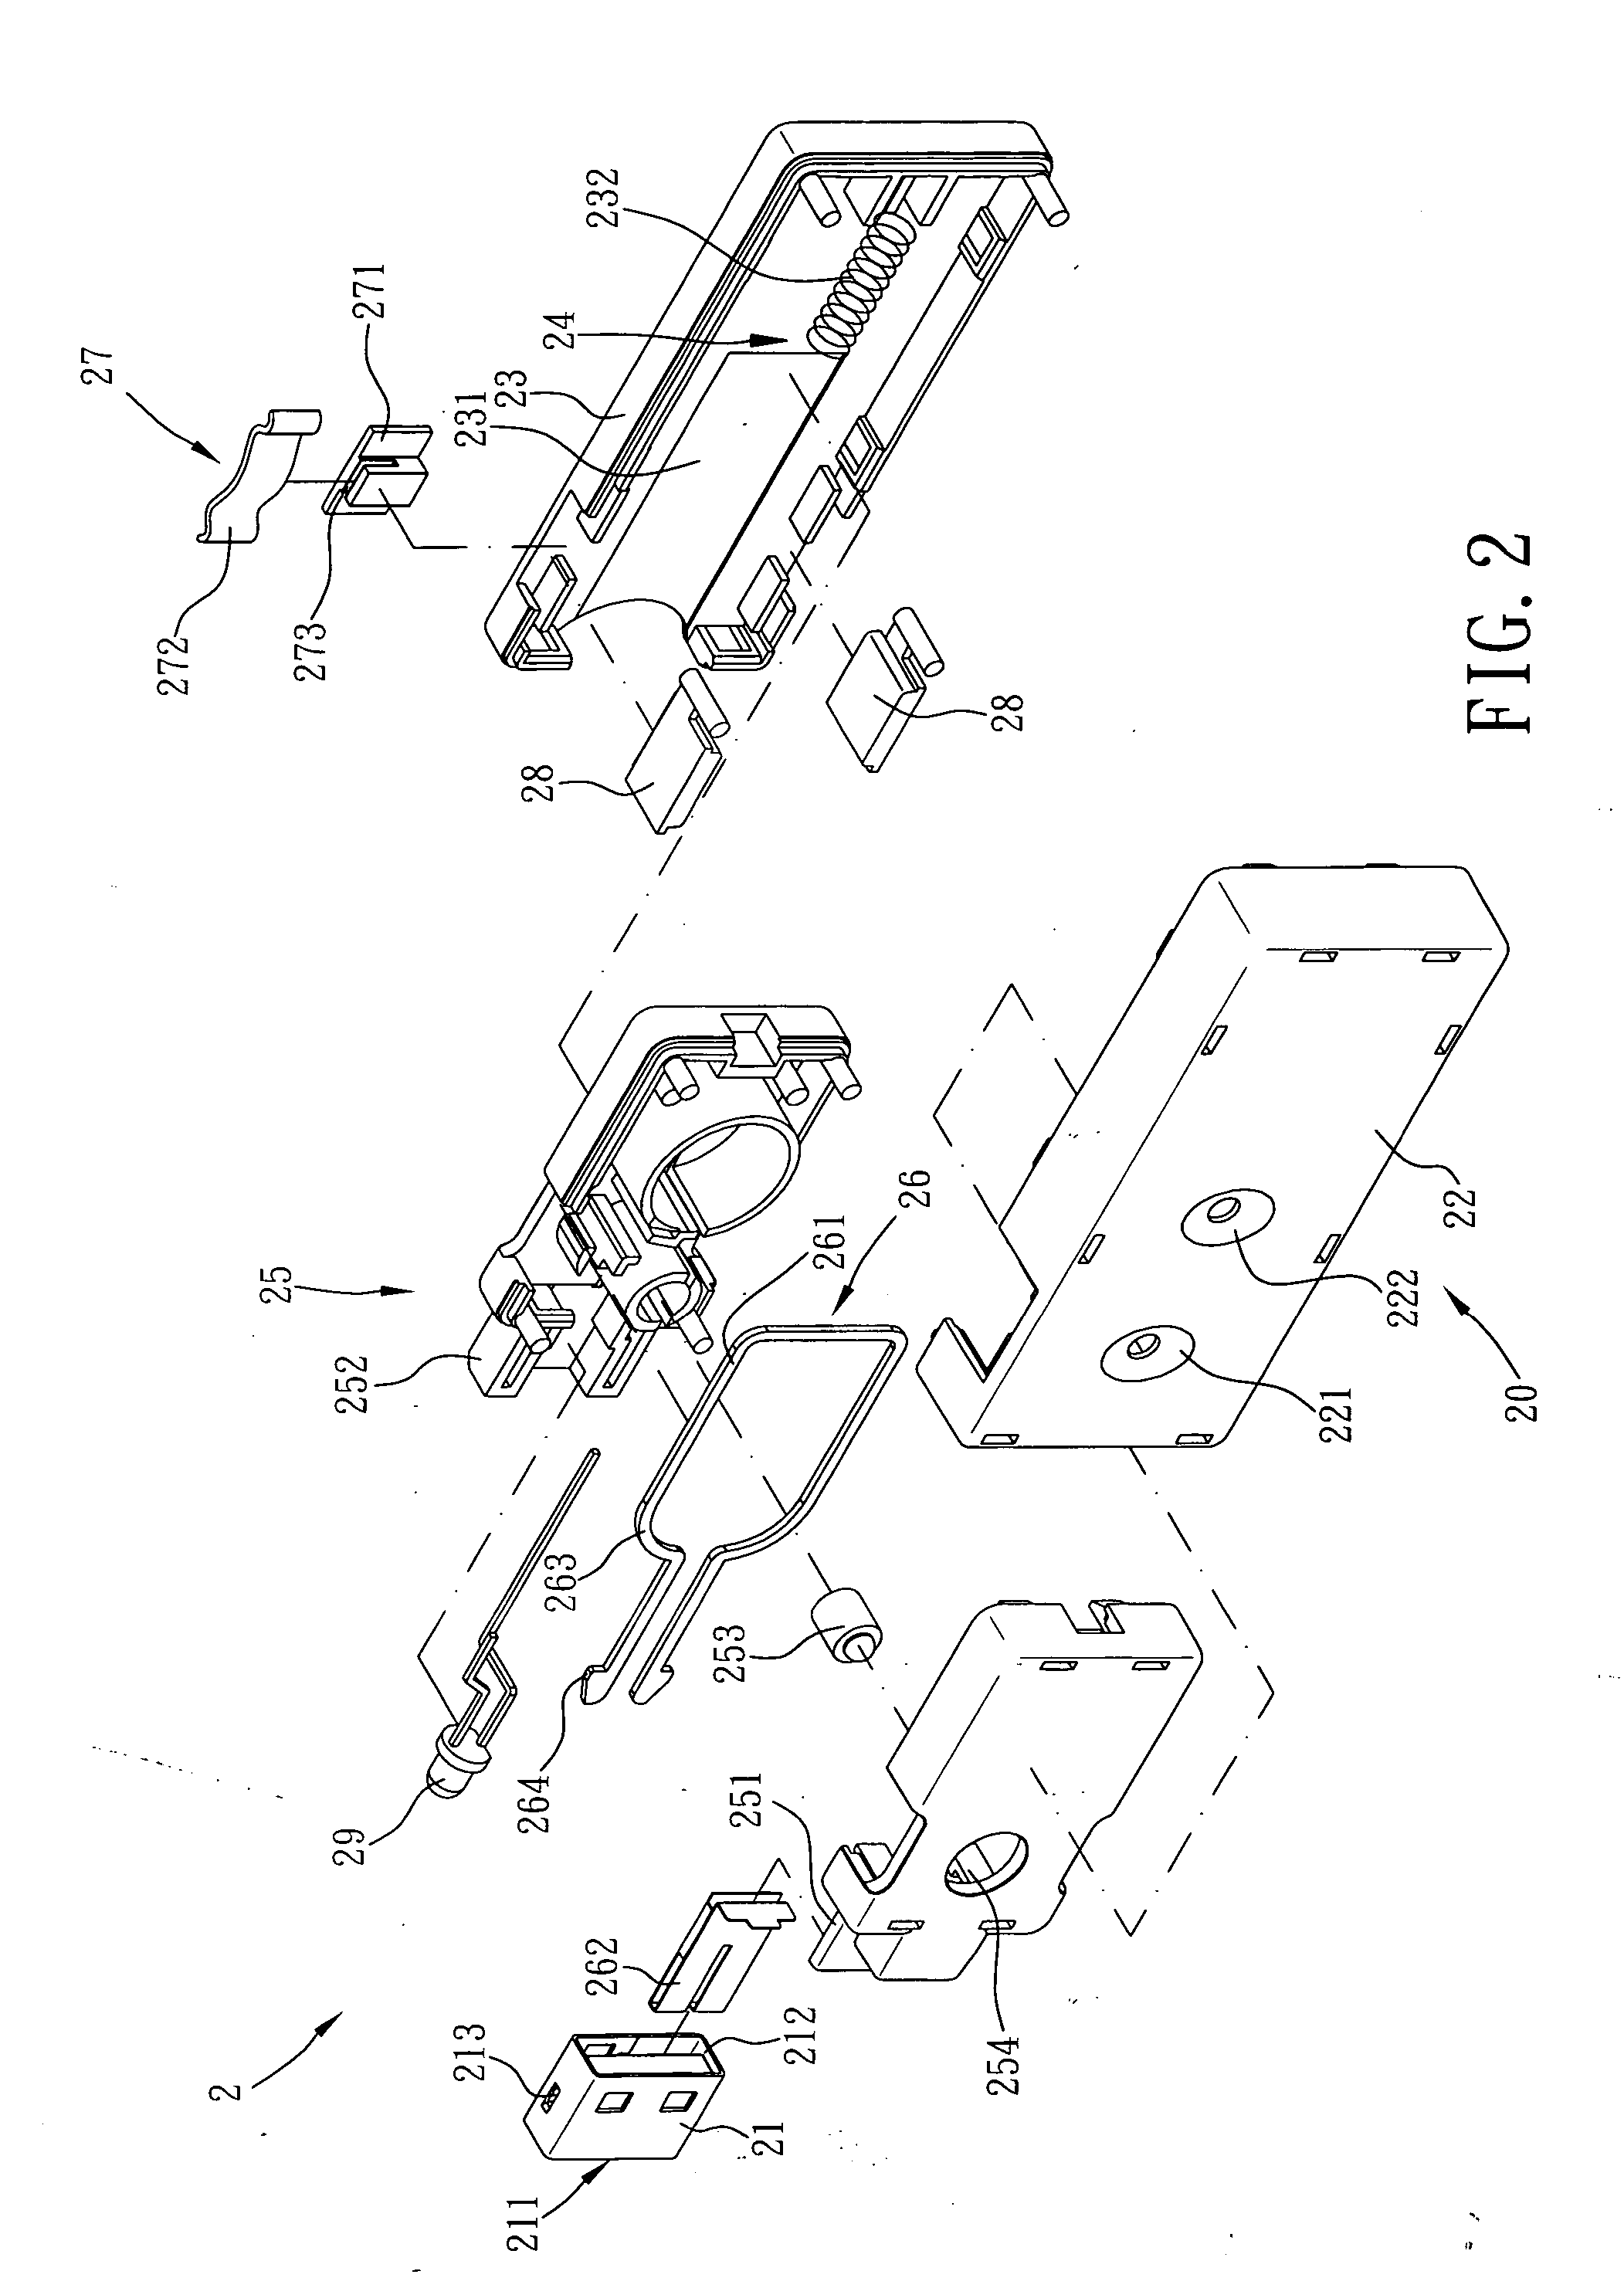 Locking device of USB port